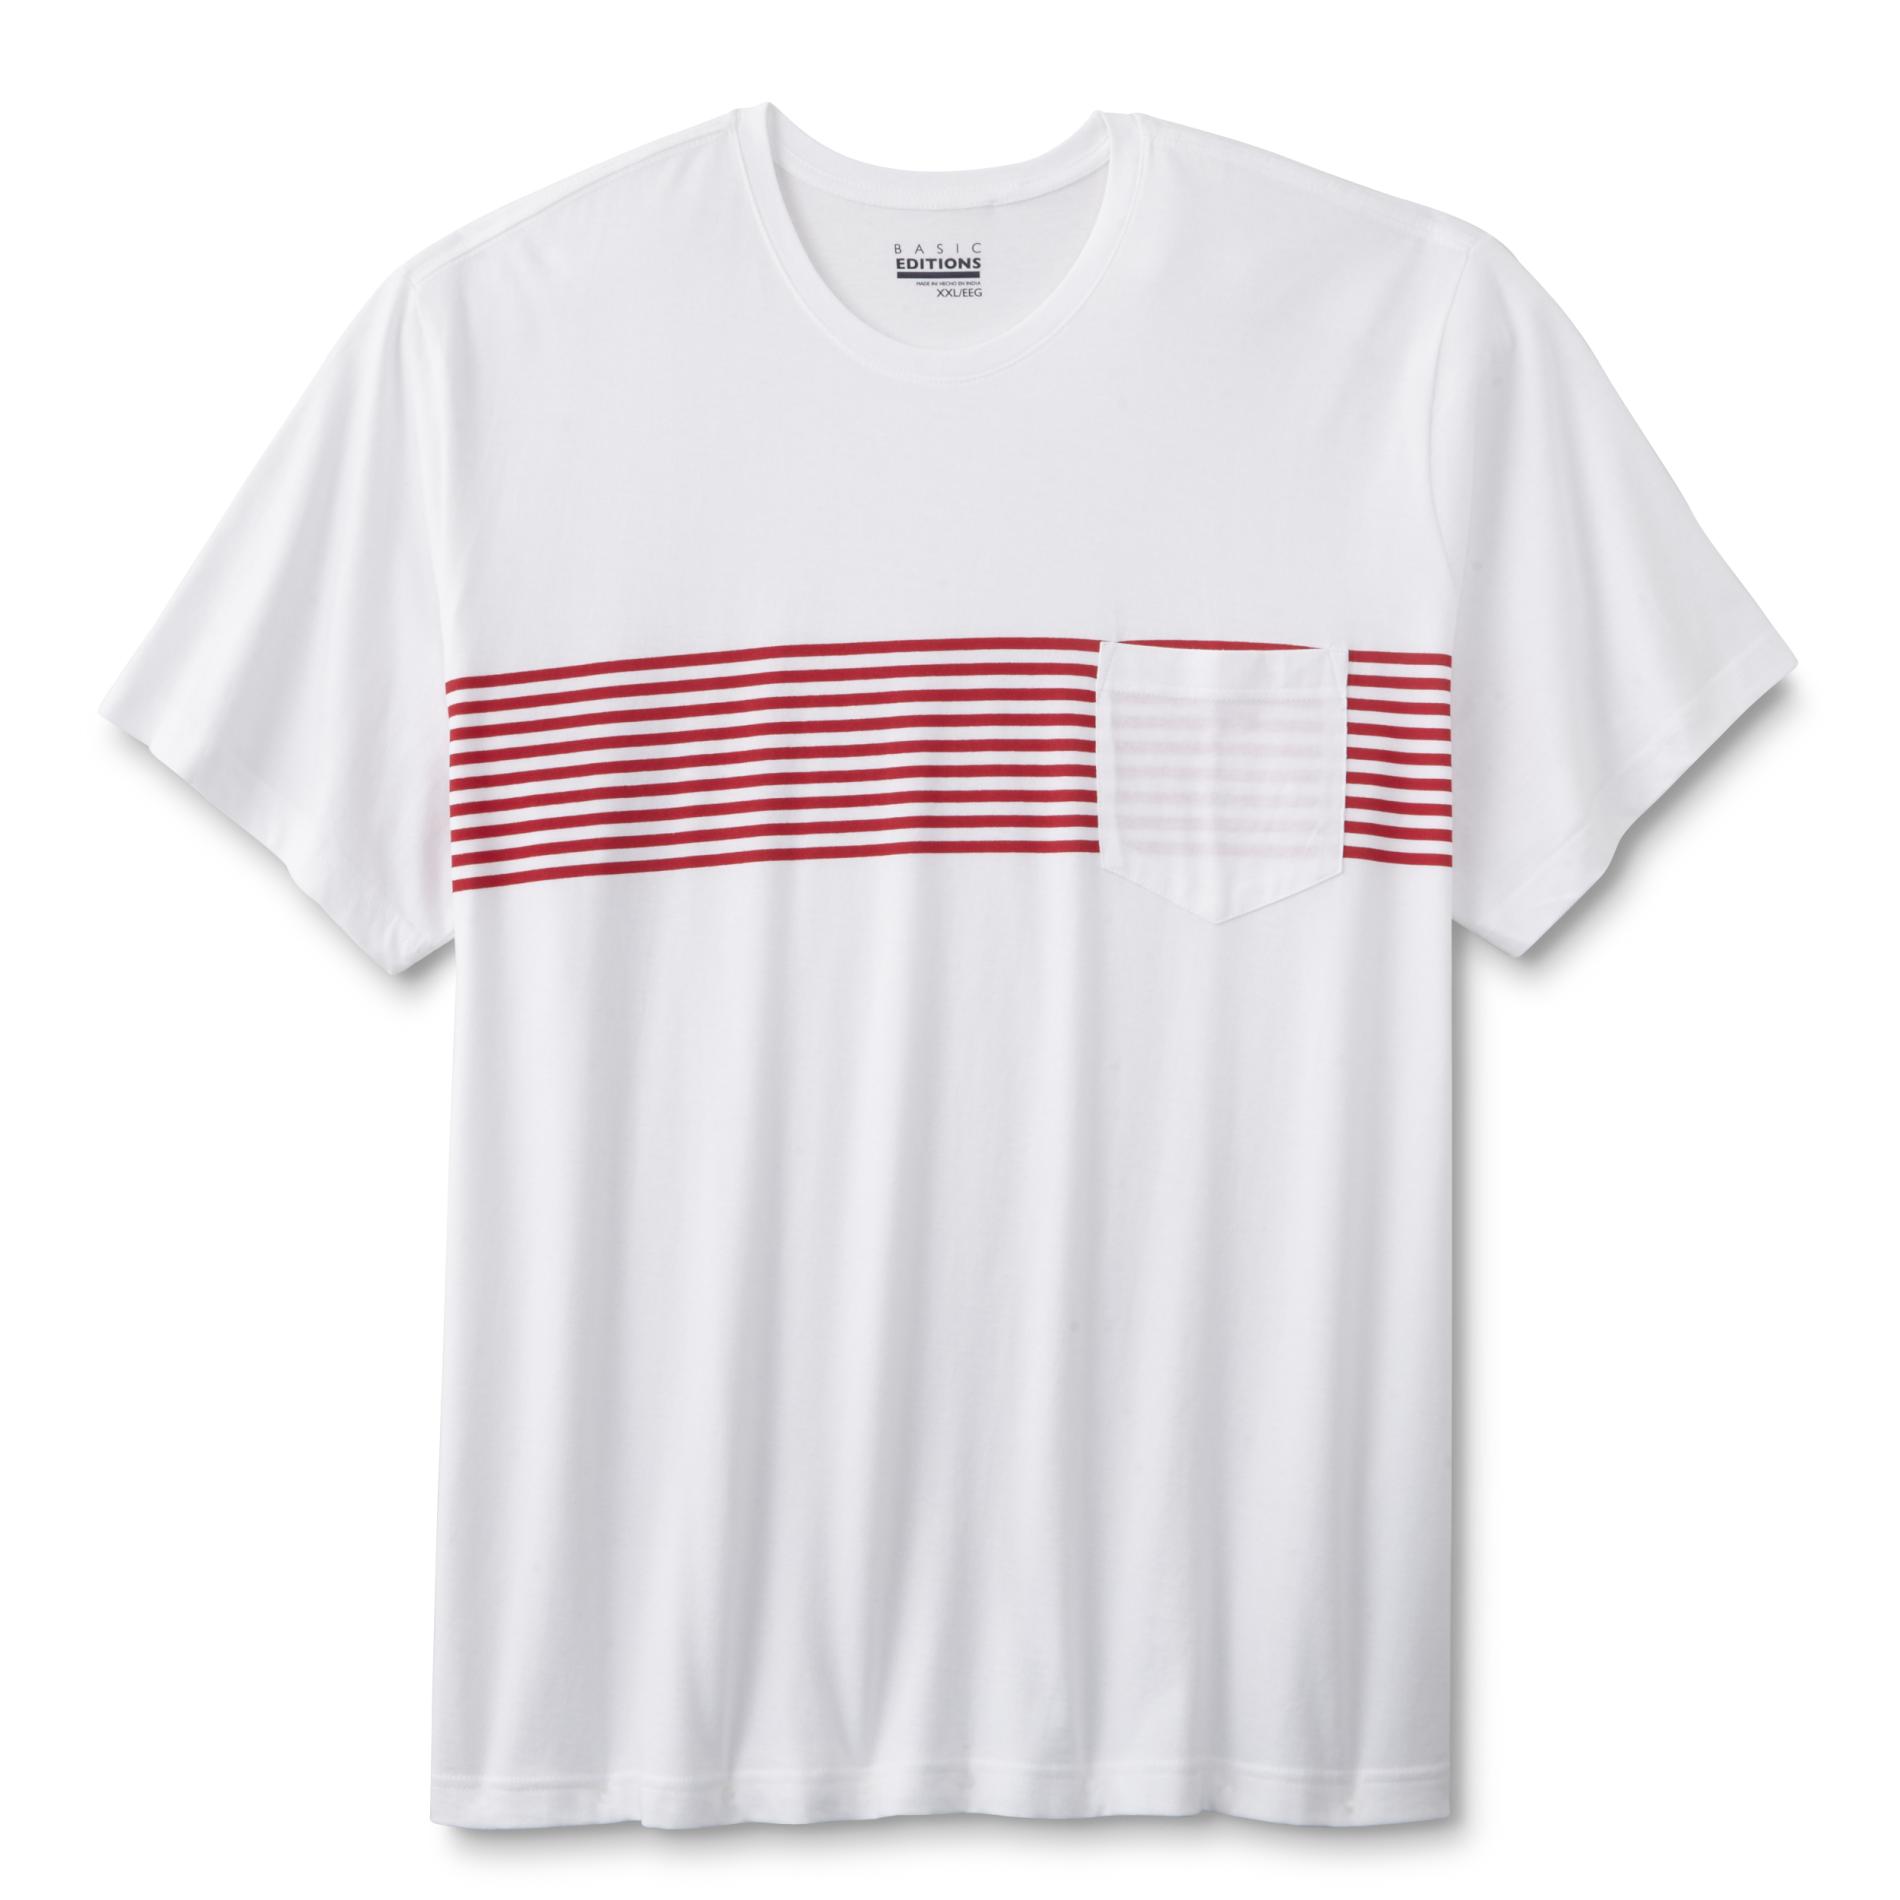 Basic Editions Men's Big & Tall Pocket T-Shirt - Striped